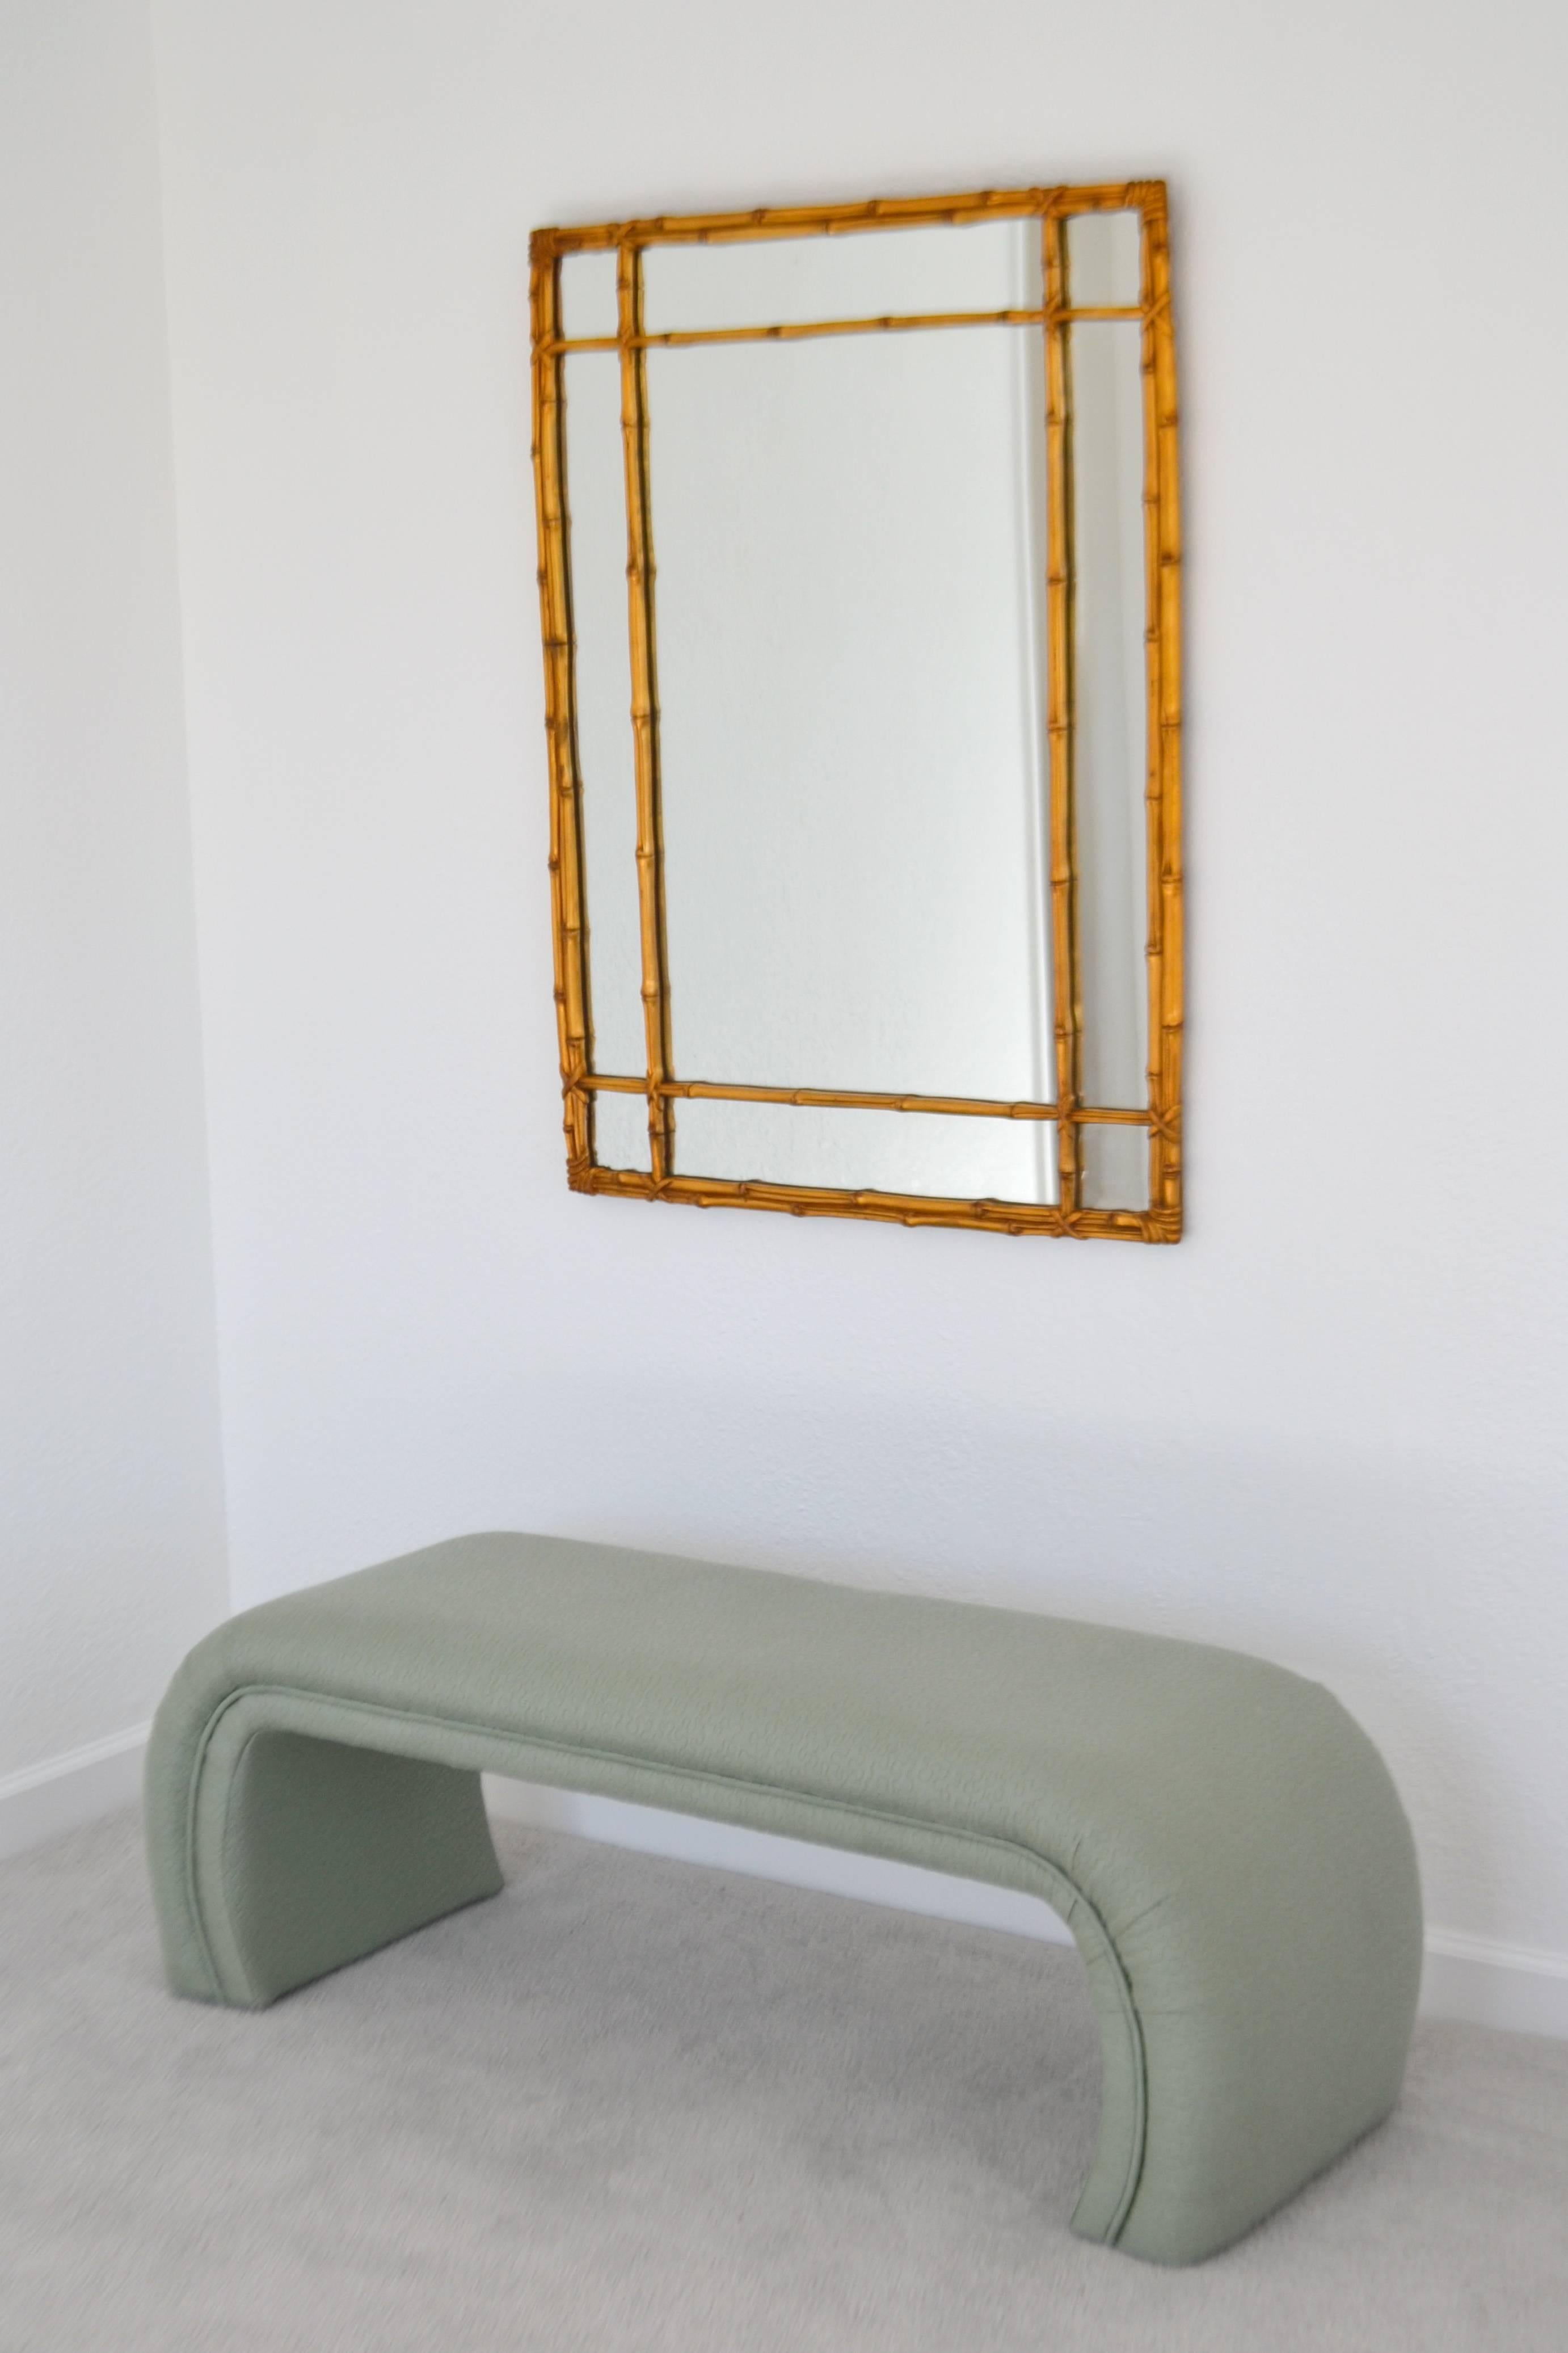 Glamorous Hollywood Regency faux bamboo gilt rectangular wall mirror, circa 1950s-1960s.